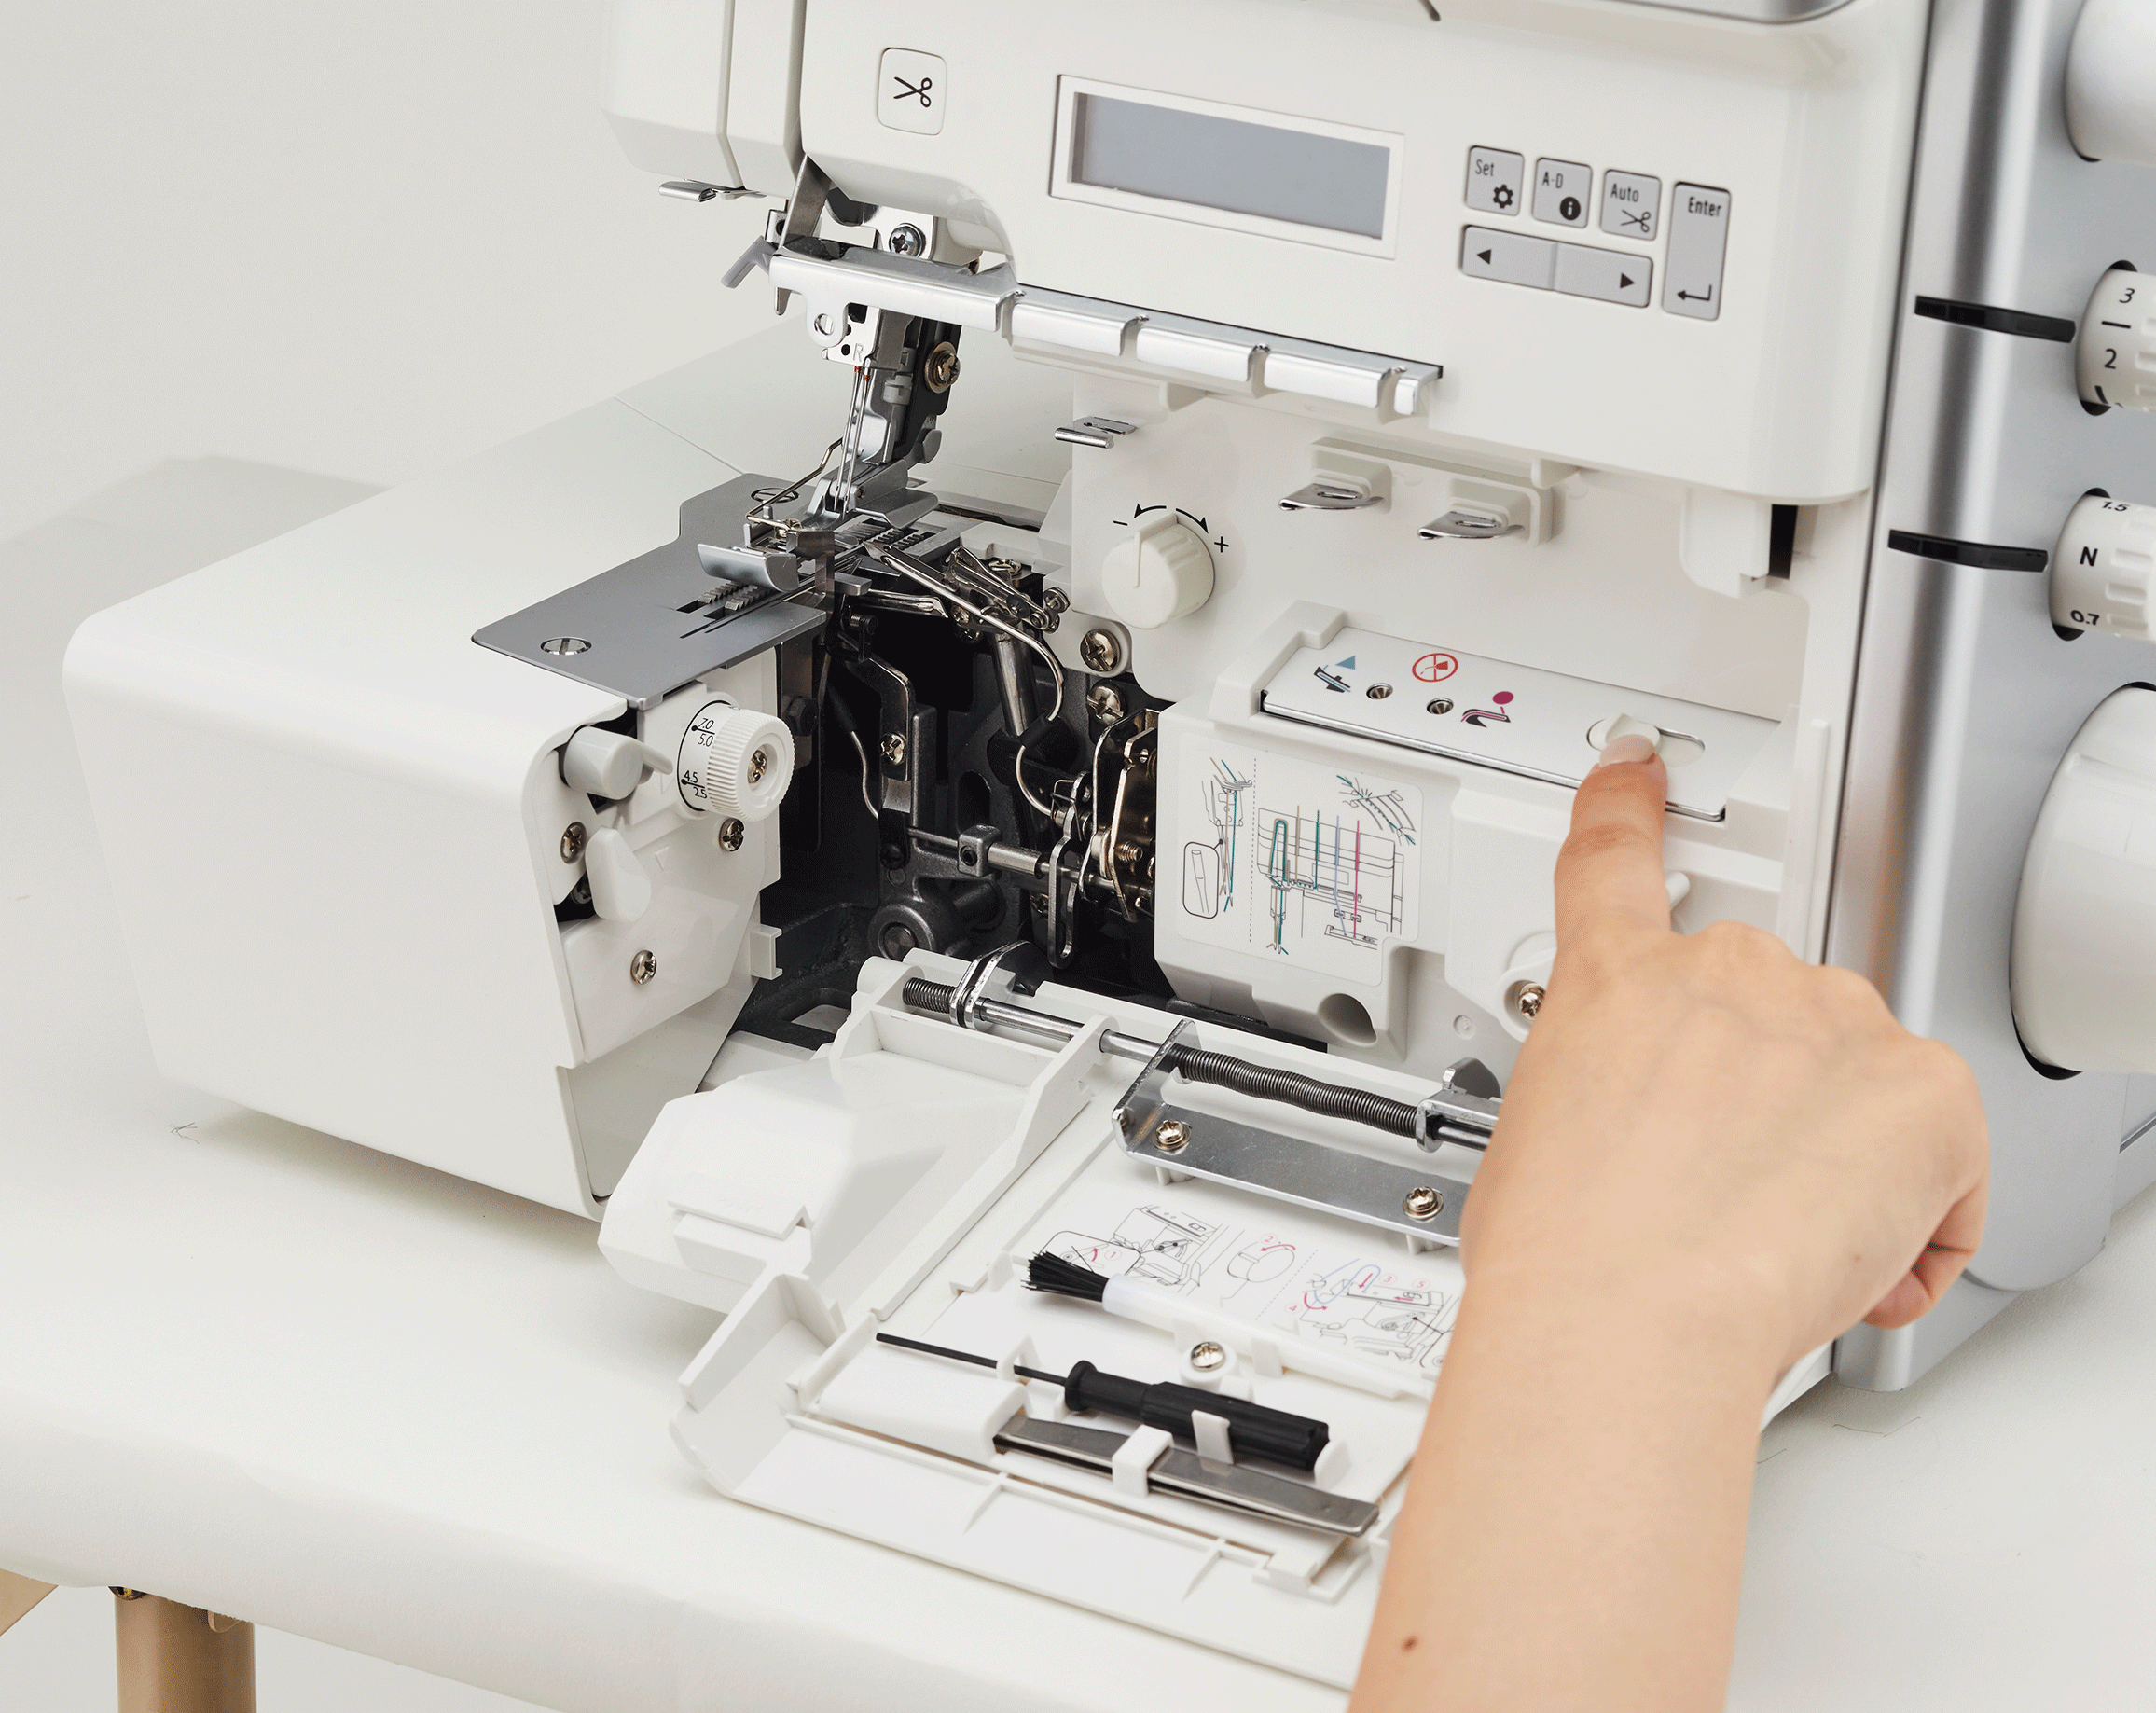 JUKI Akane MO-3000QVP Sewing Machine view of machine with inside exposed